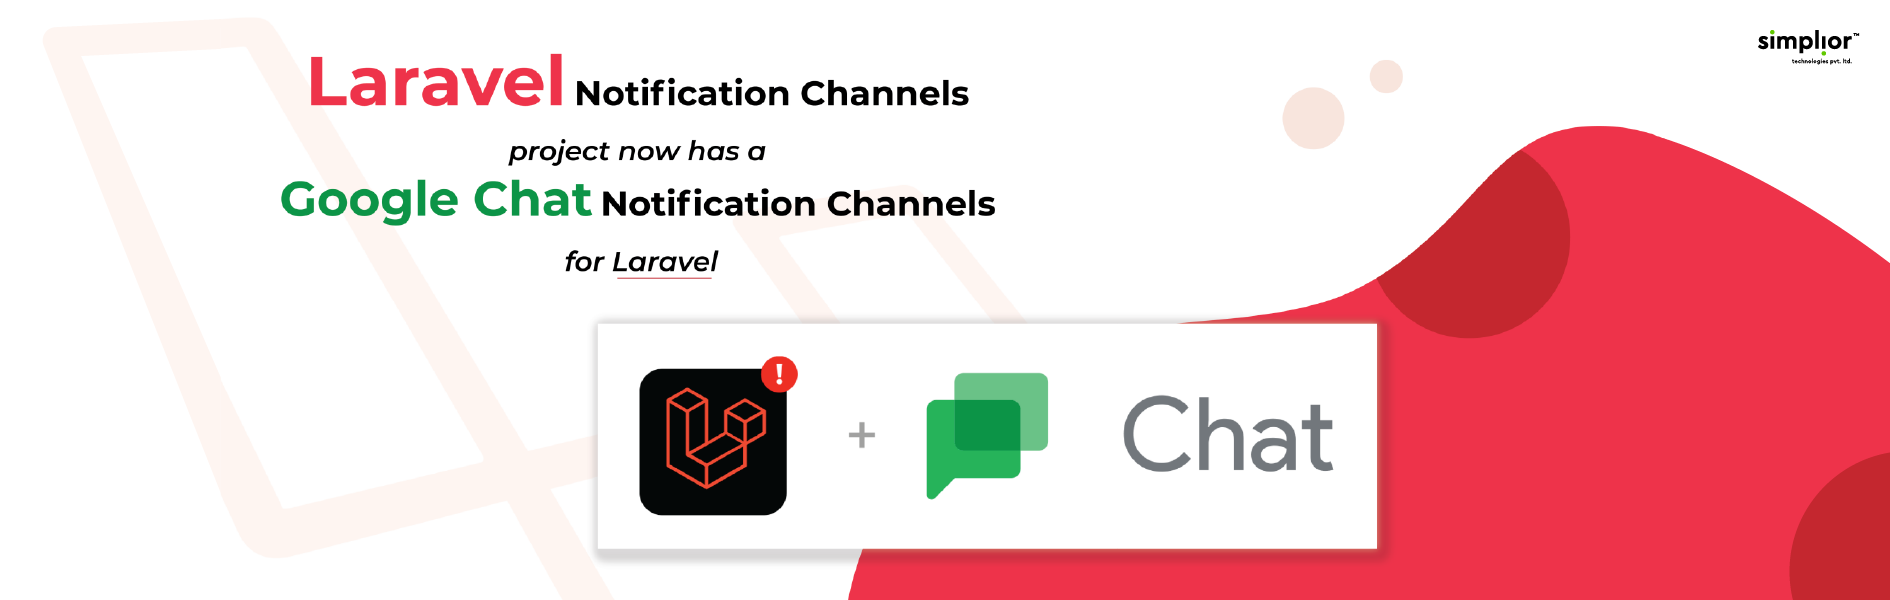 Google Chat notification channel for Laravel - Simplior